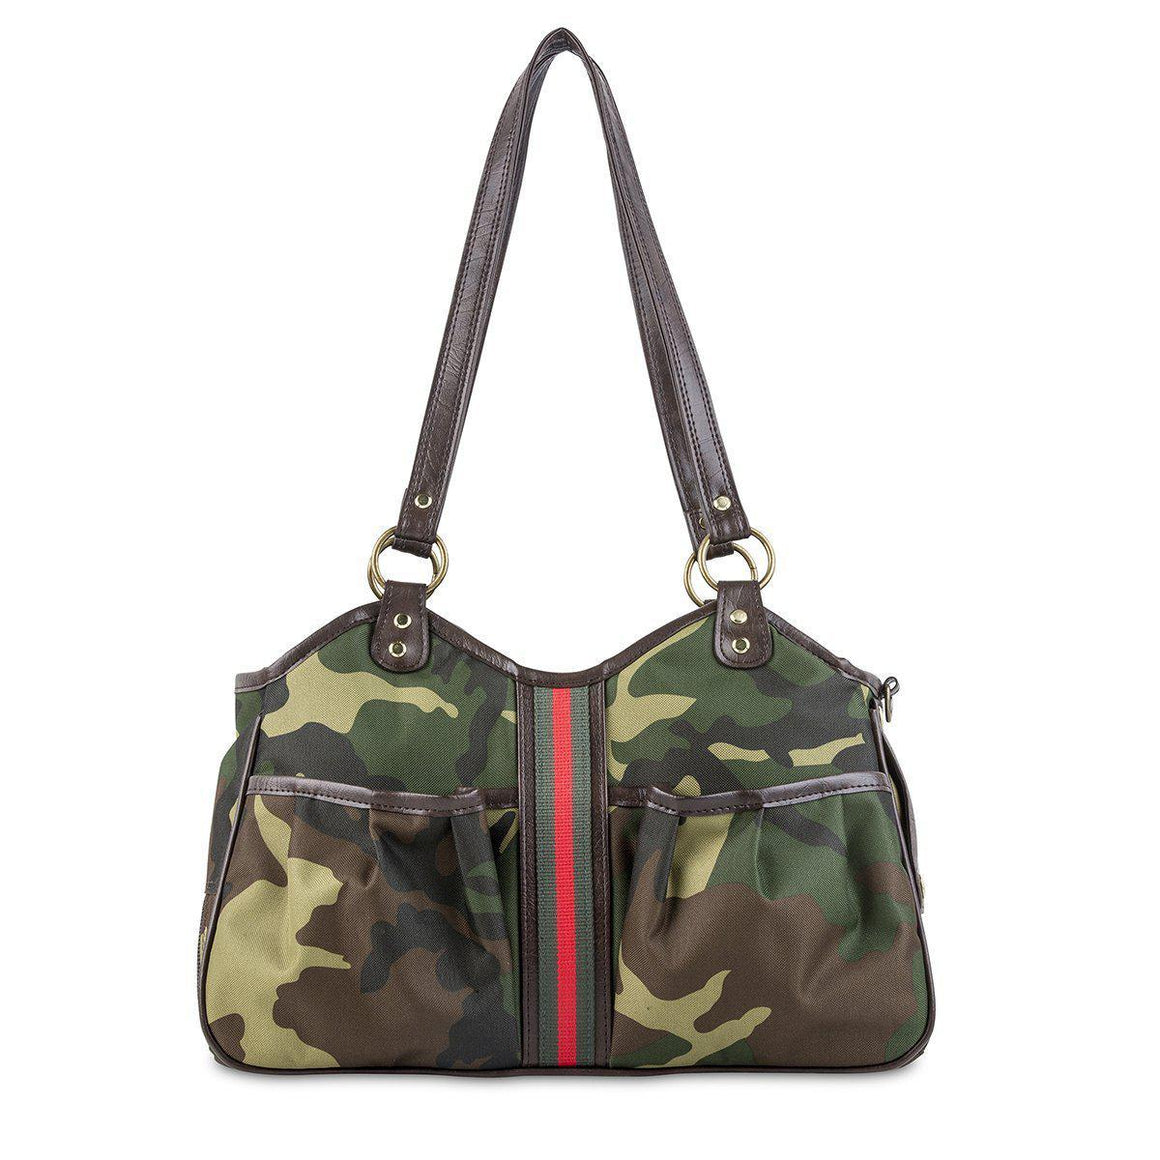 Petote Metro Bag Couture Collection - Camo with Stripe